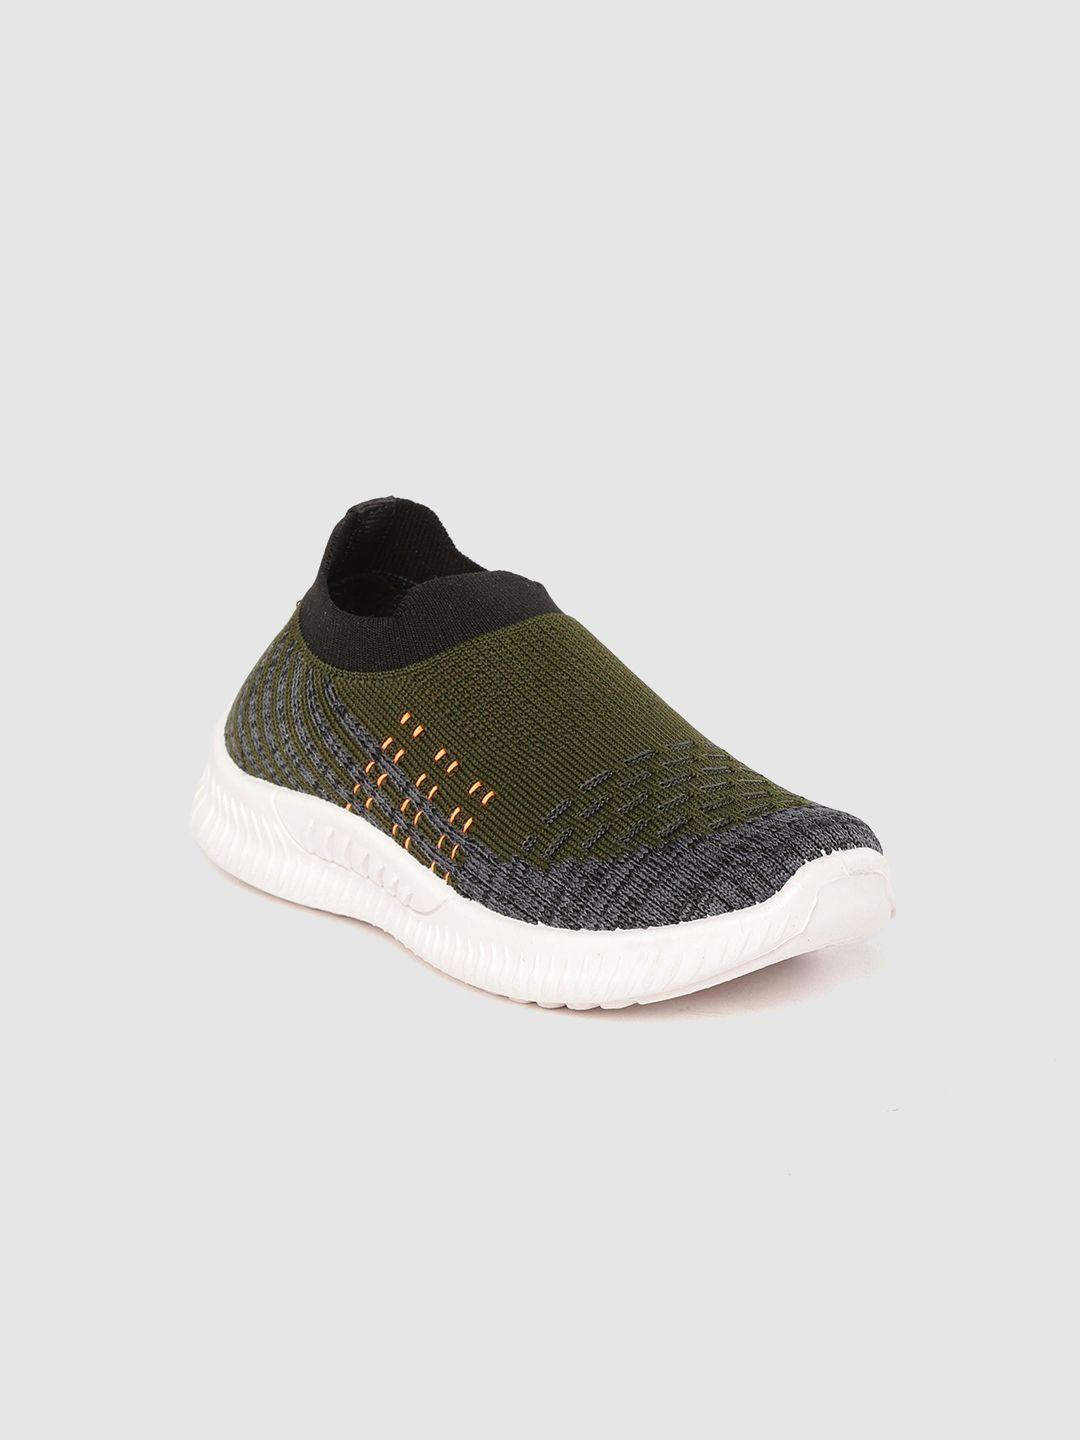 yk boys olive green & grey woven design slip-on sneakers